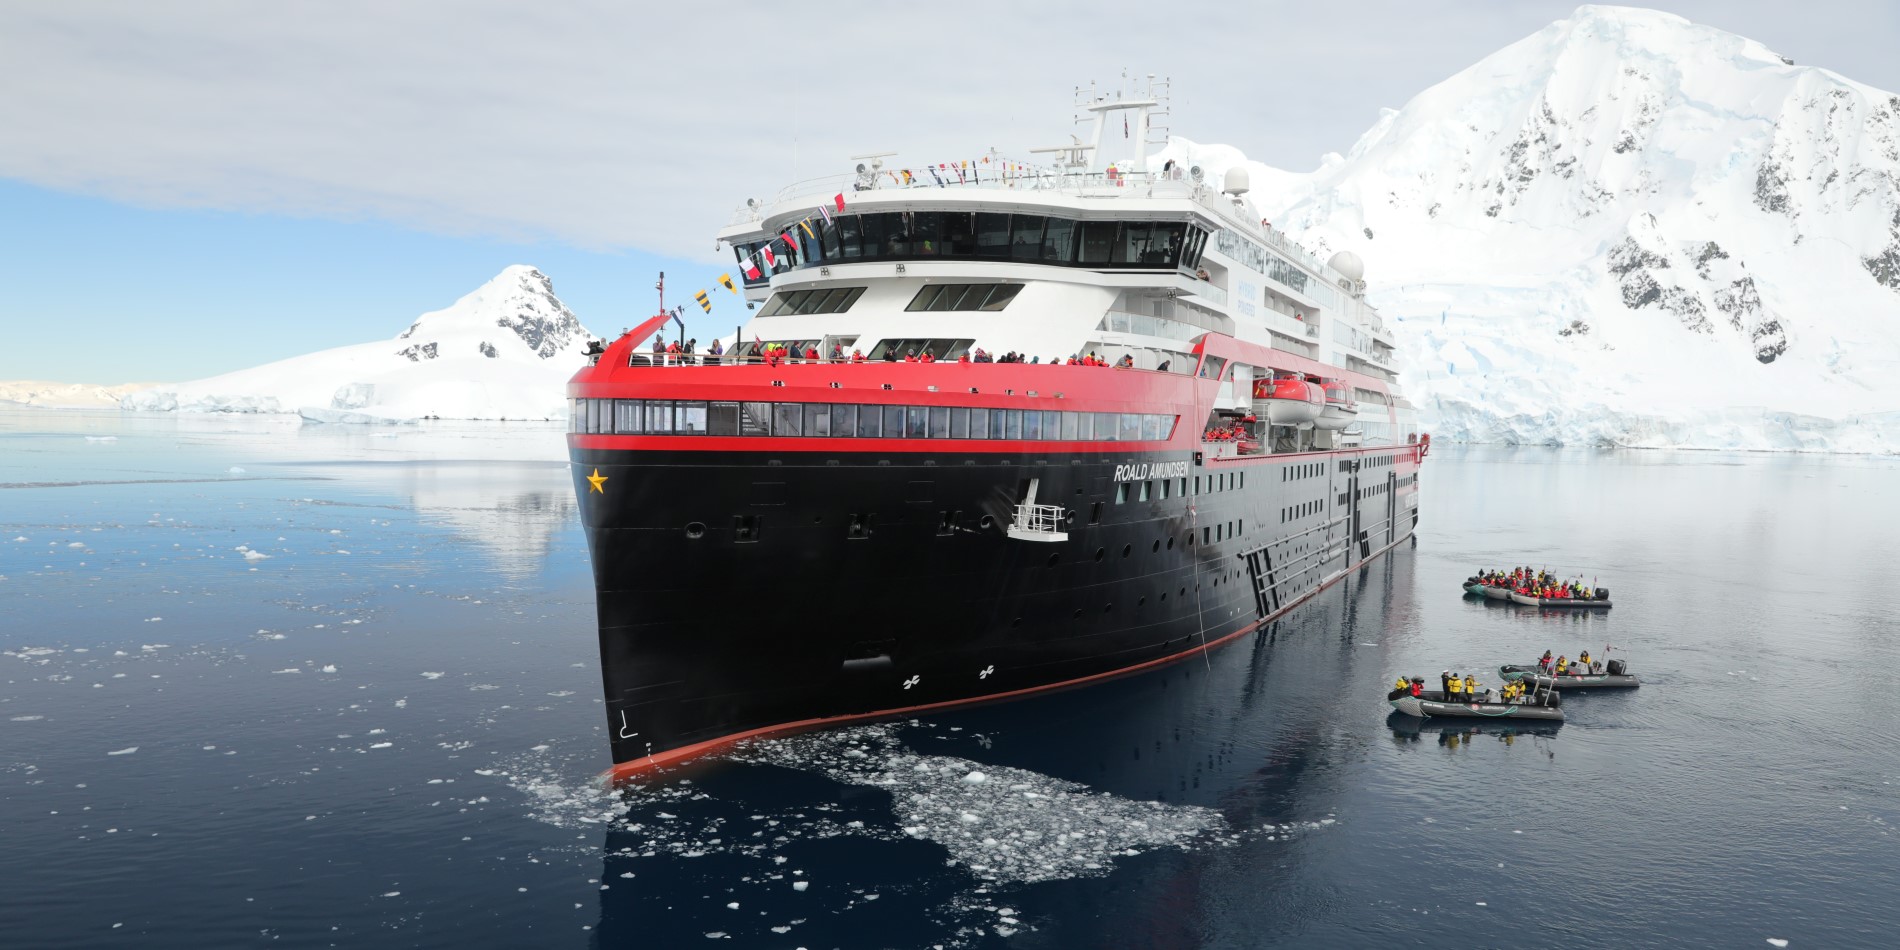 MS Roald Amundsen docked in Antarctica for the boat naming ceremony. 